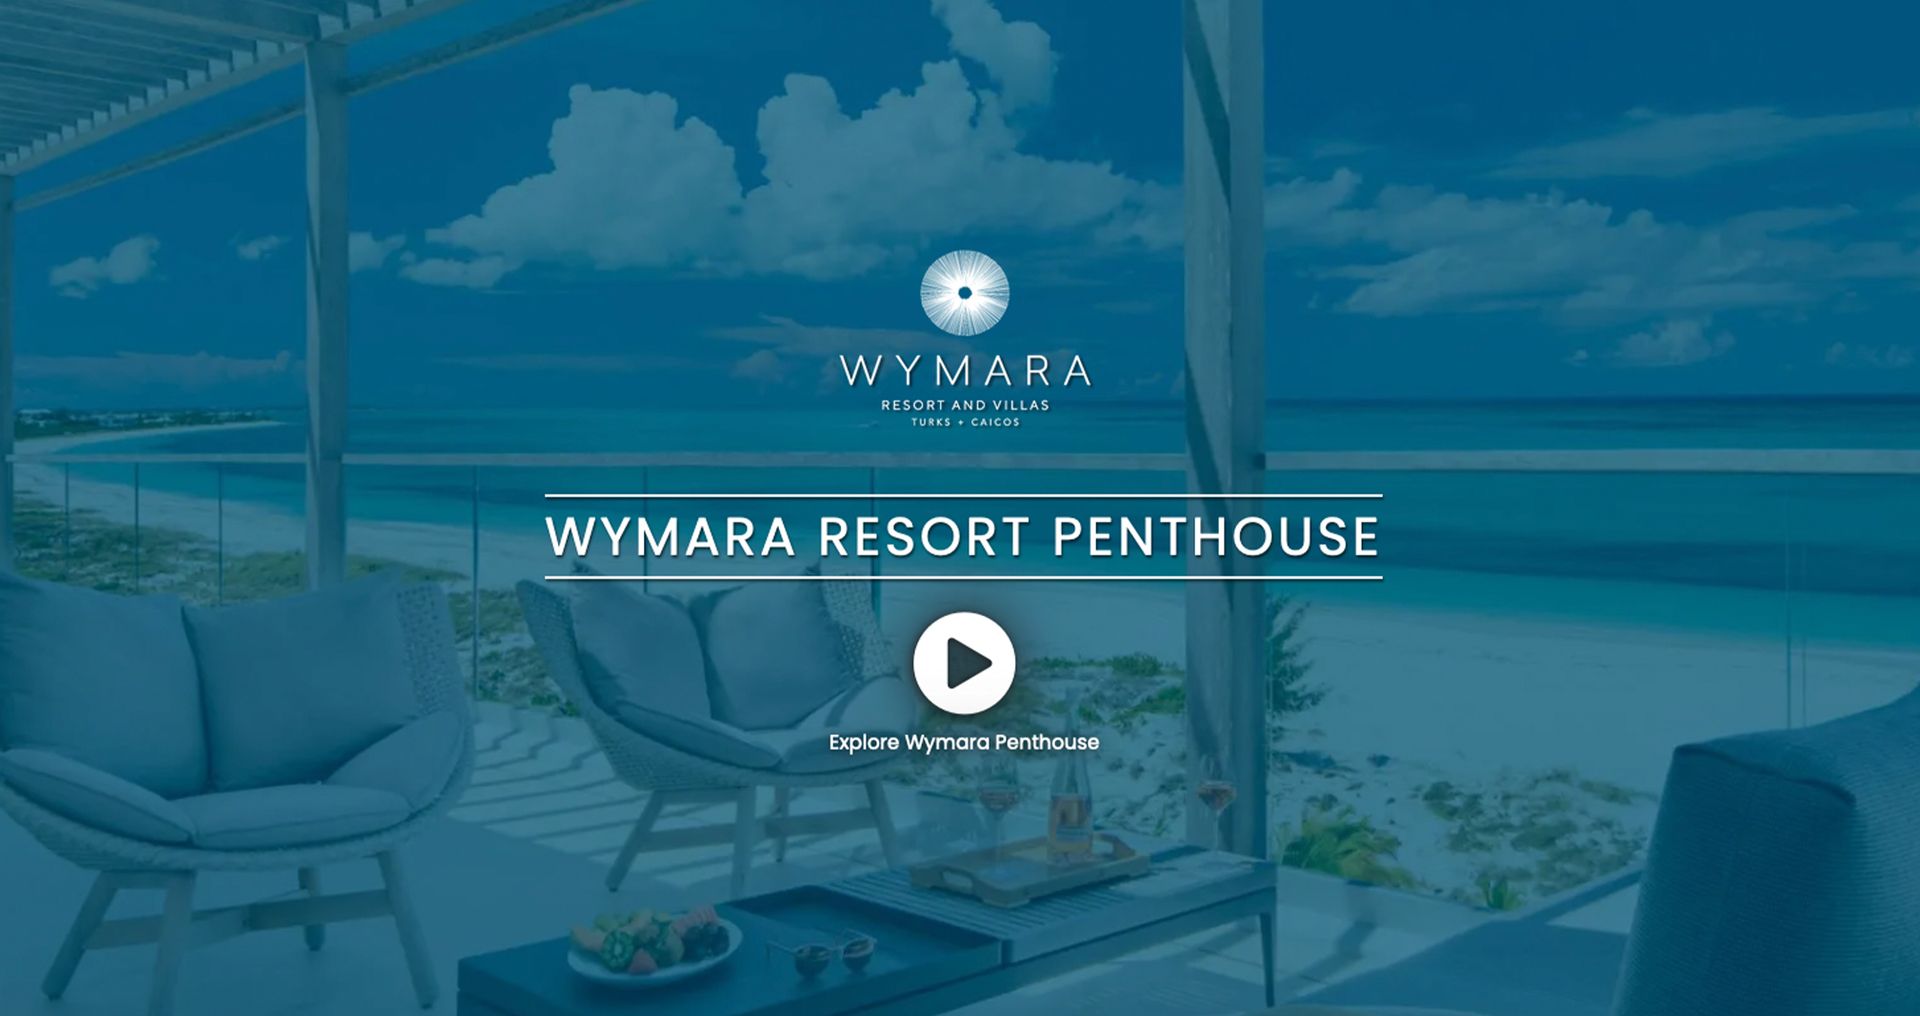 Wymara Four bedroom 360